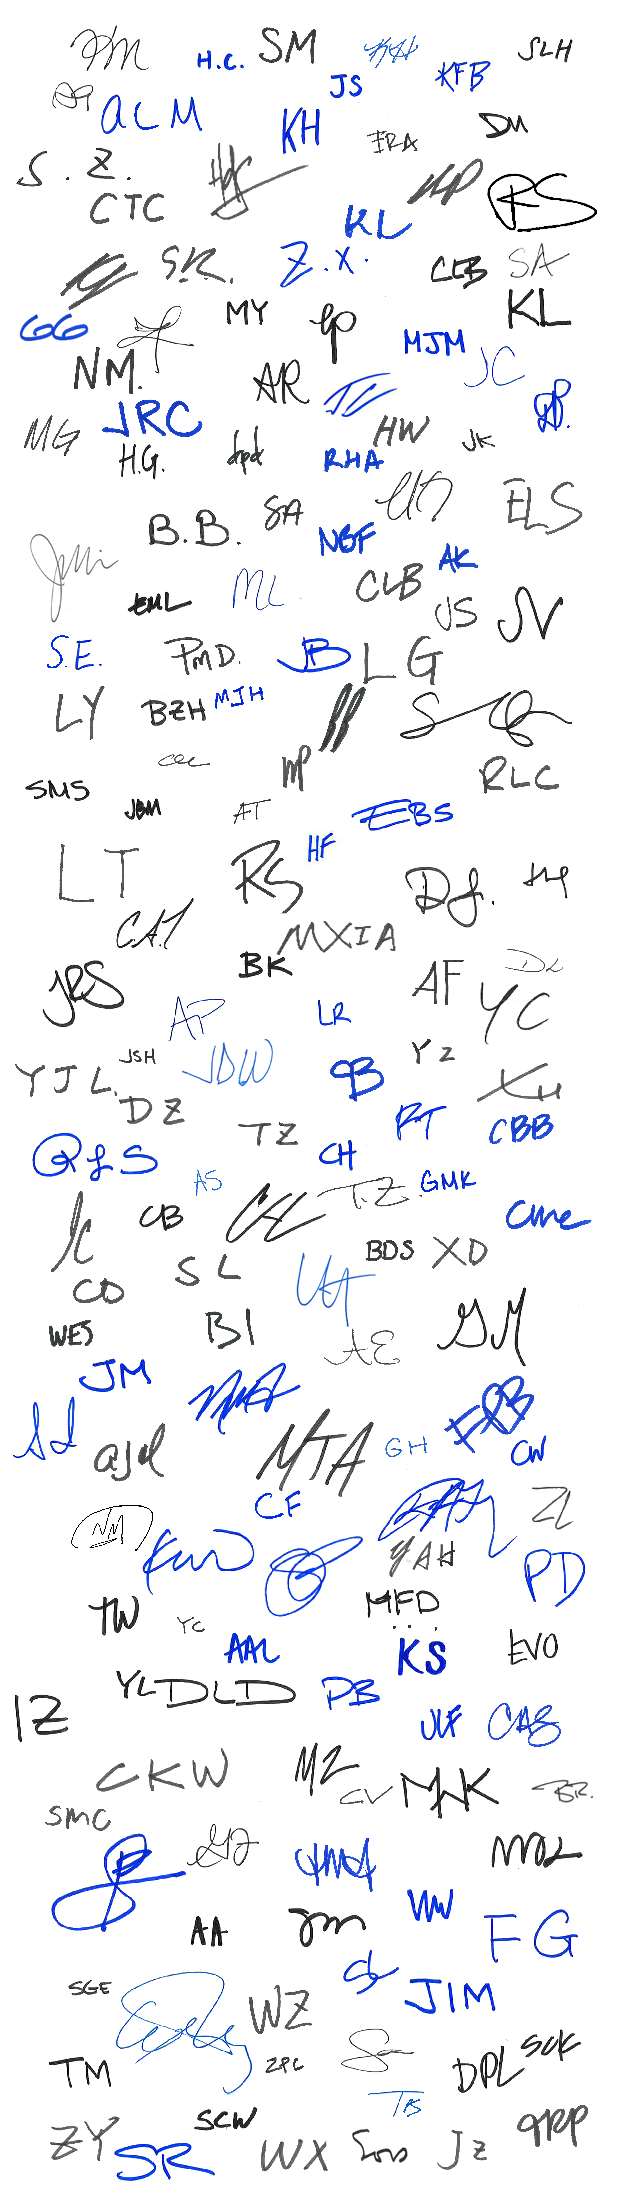 many signatures